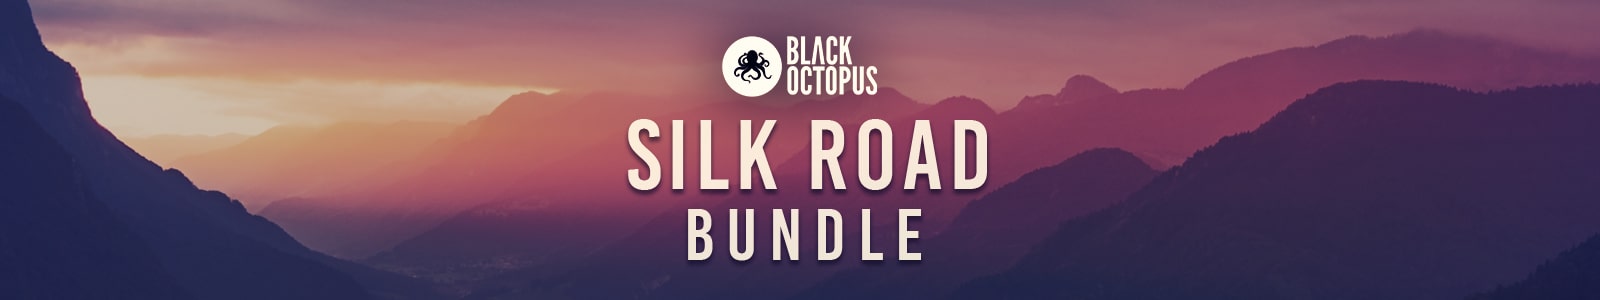 silk road bundle